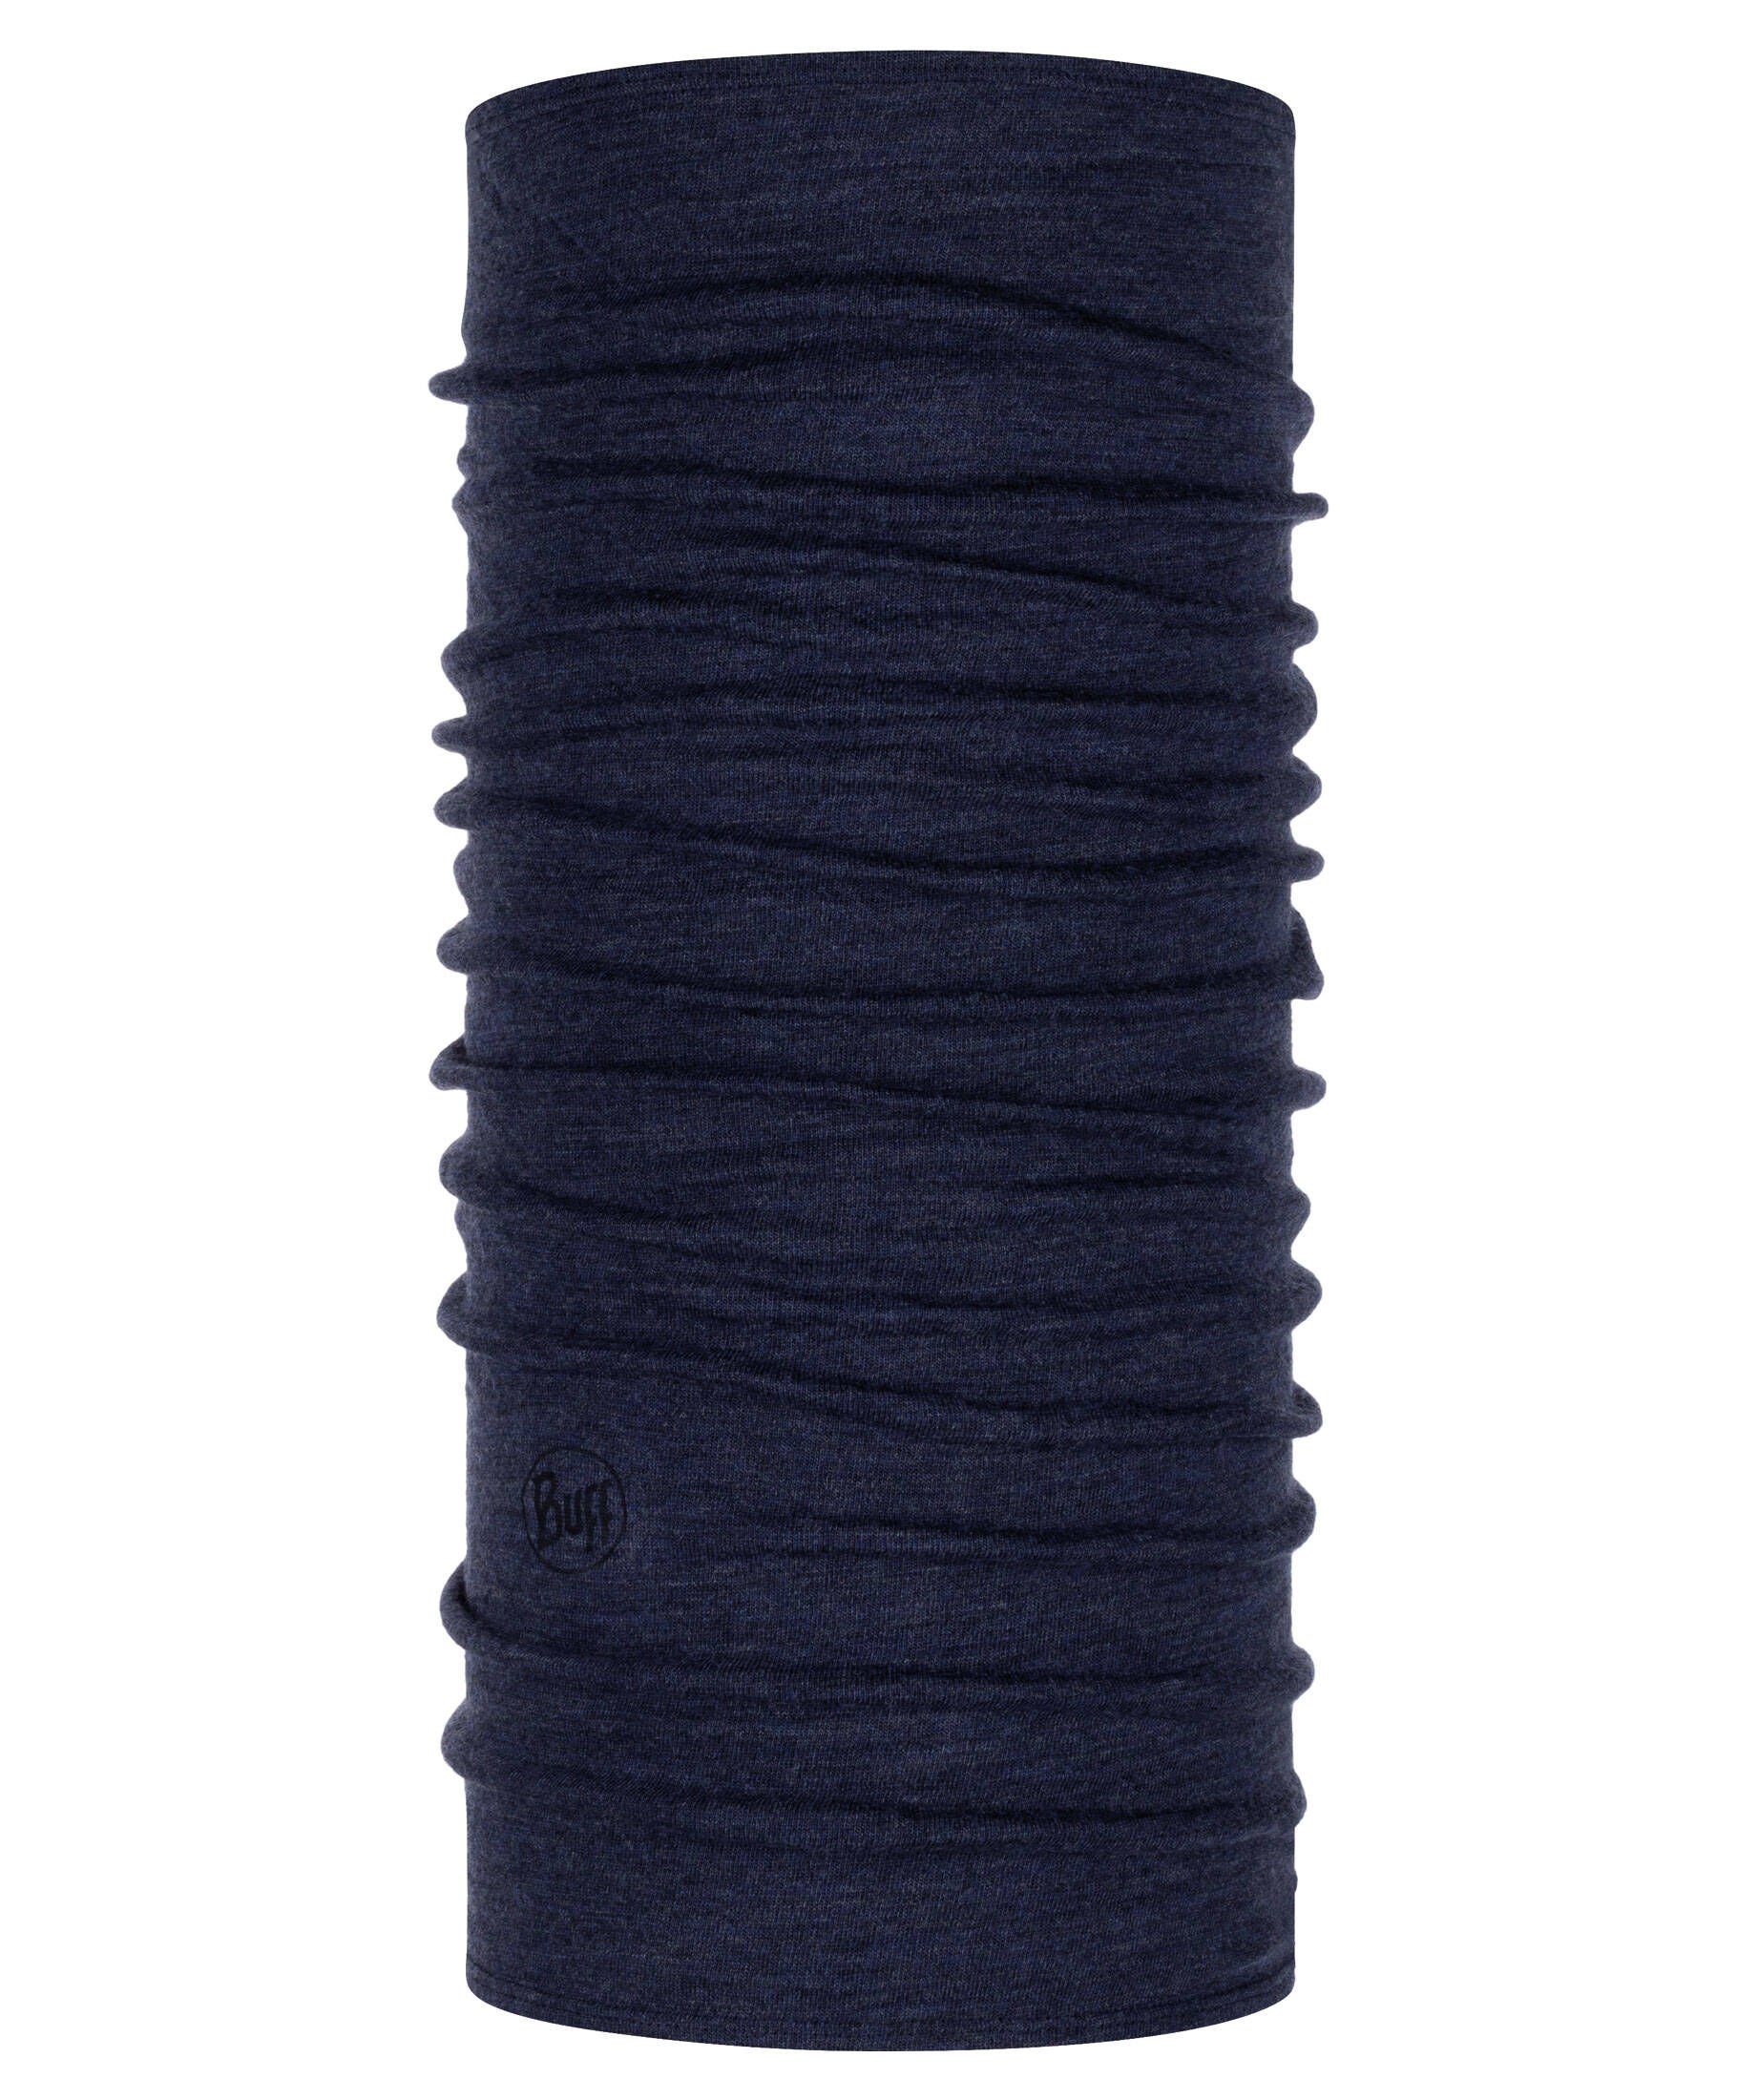 Buff Loop Multifunktionstuch "Midweight Merino Wool" nachtblau (301) | Modeschals